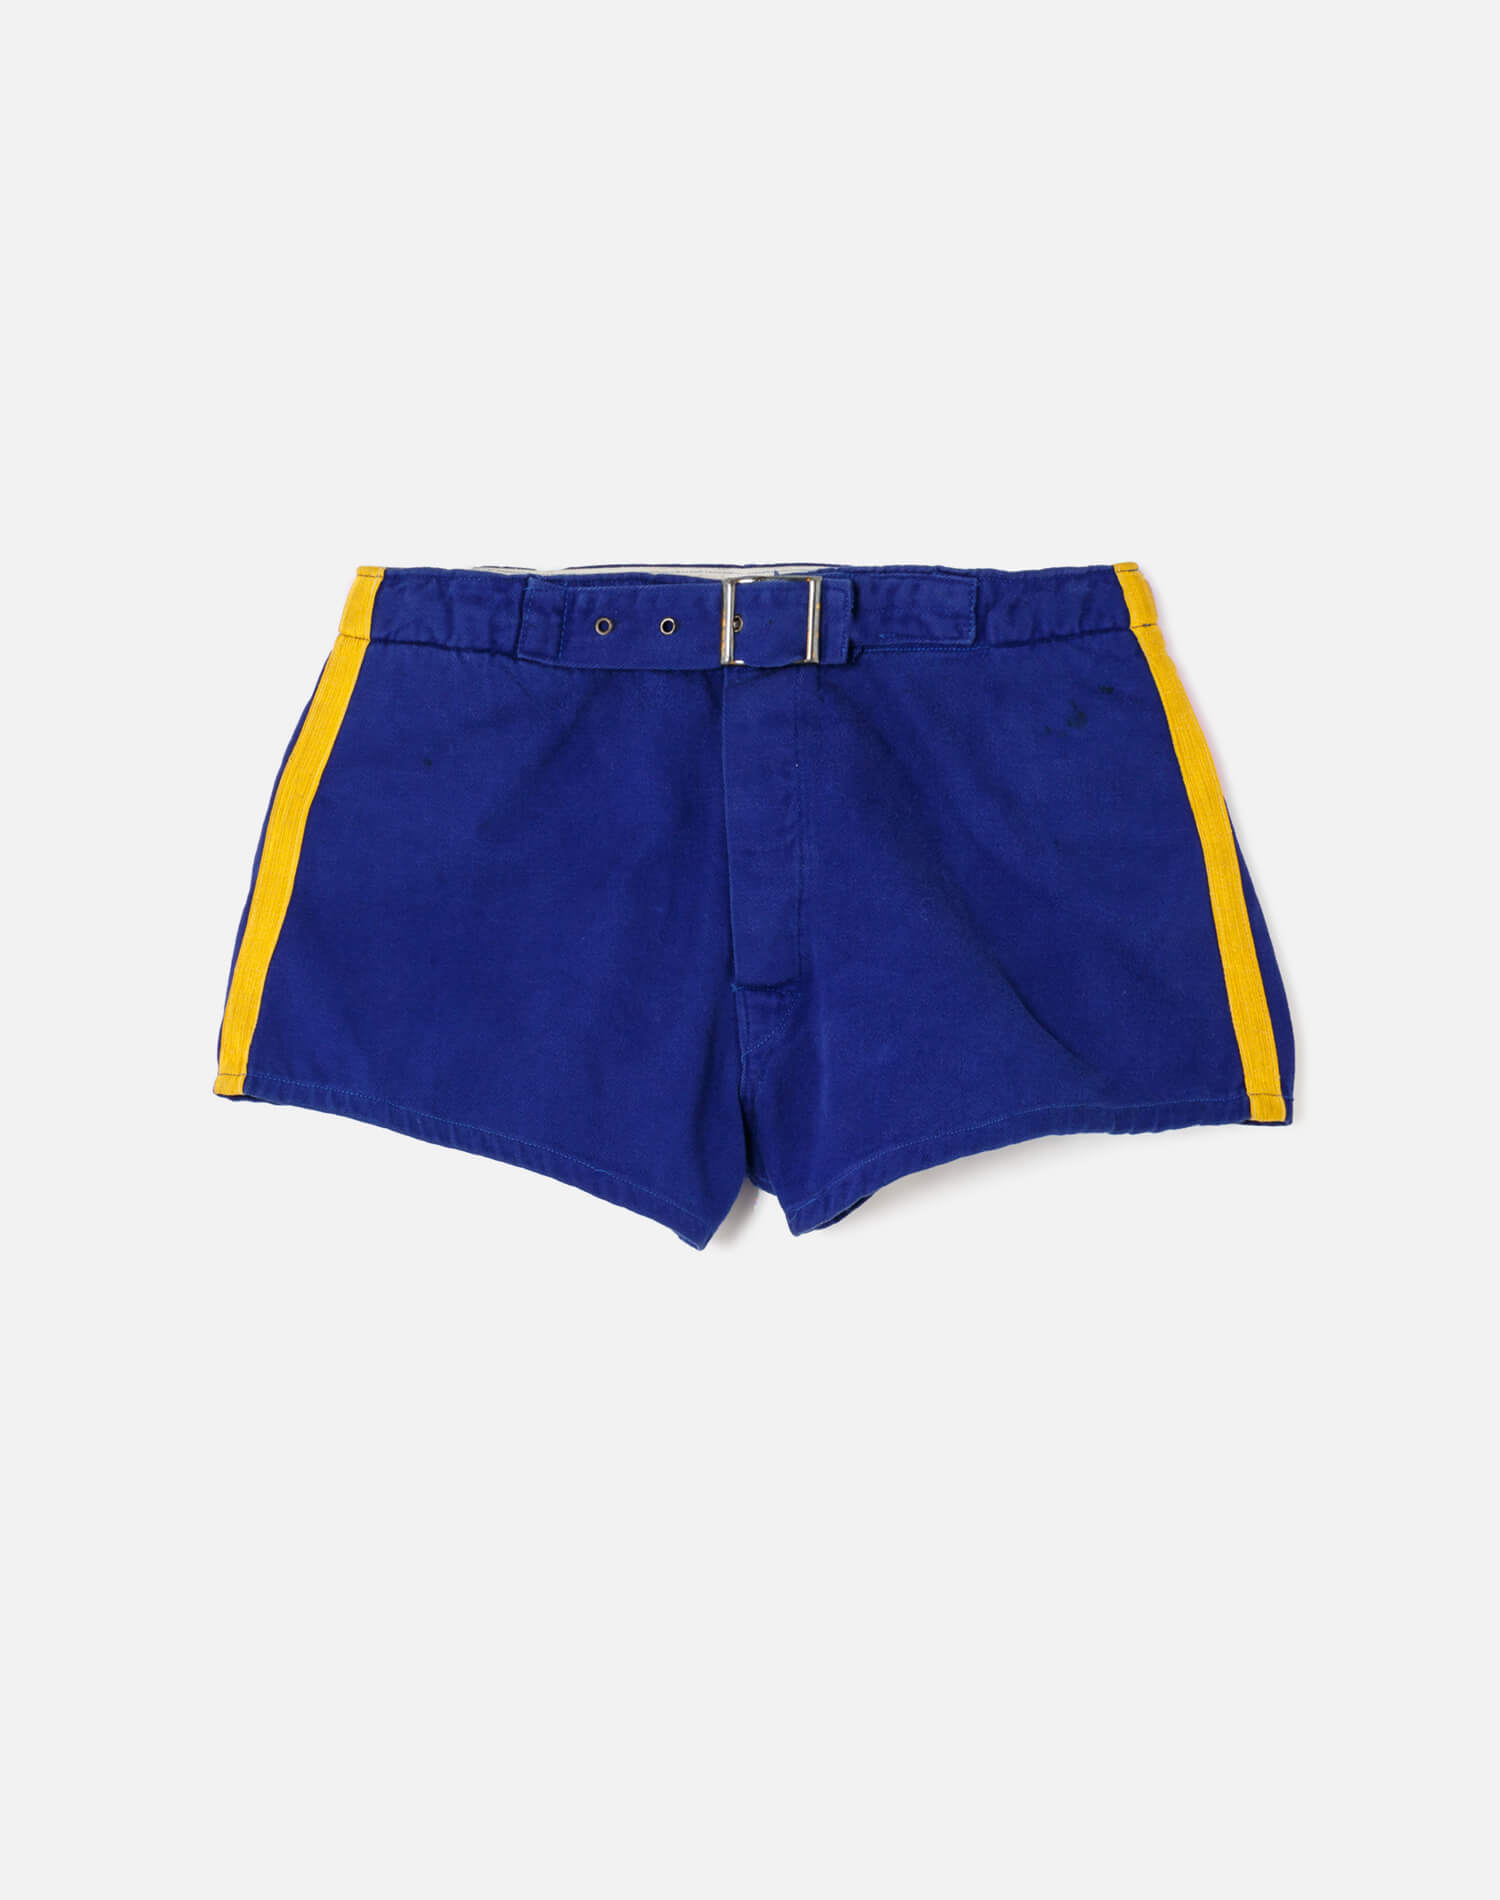 40s Athletic Shorts